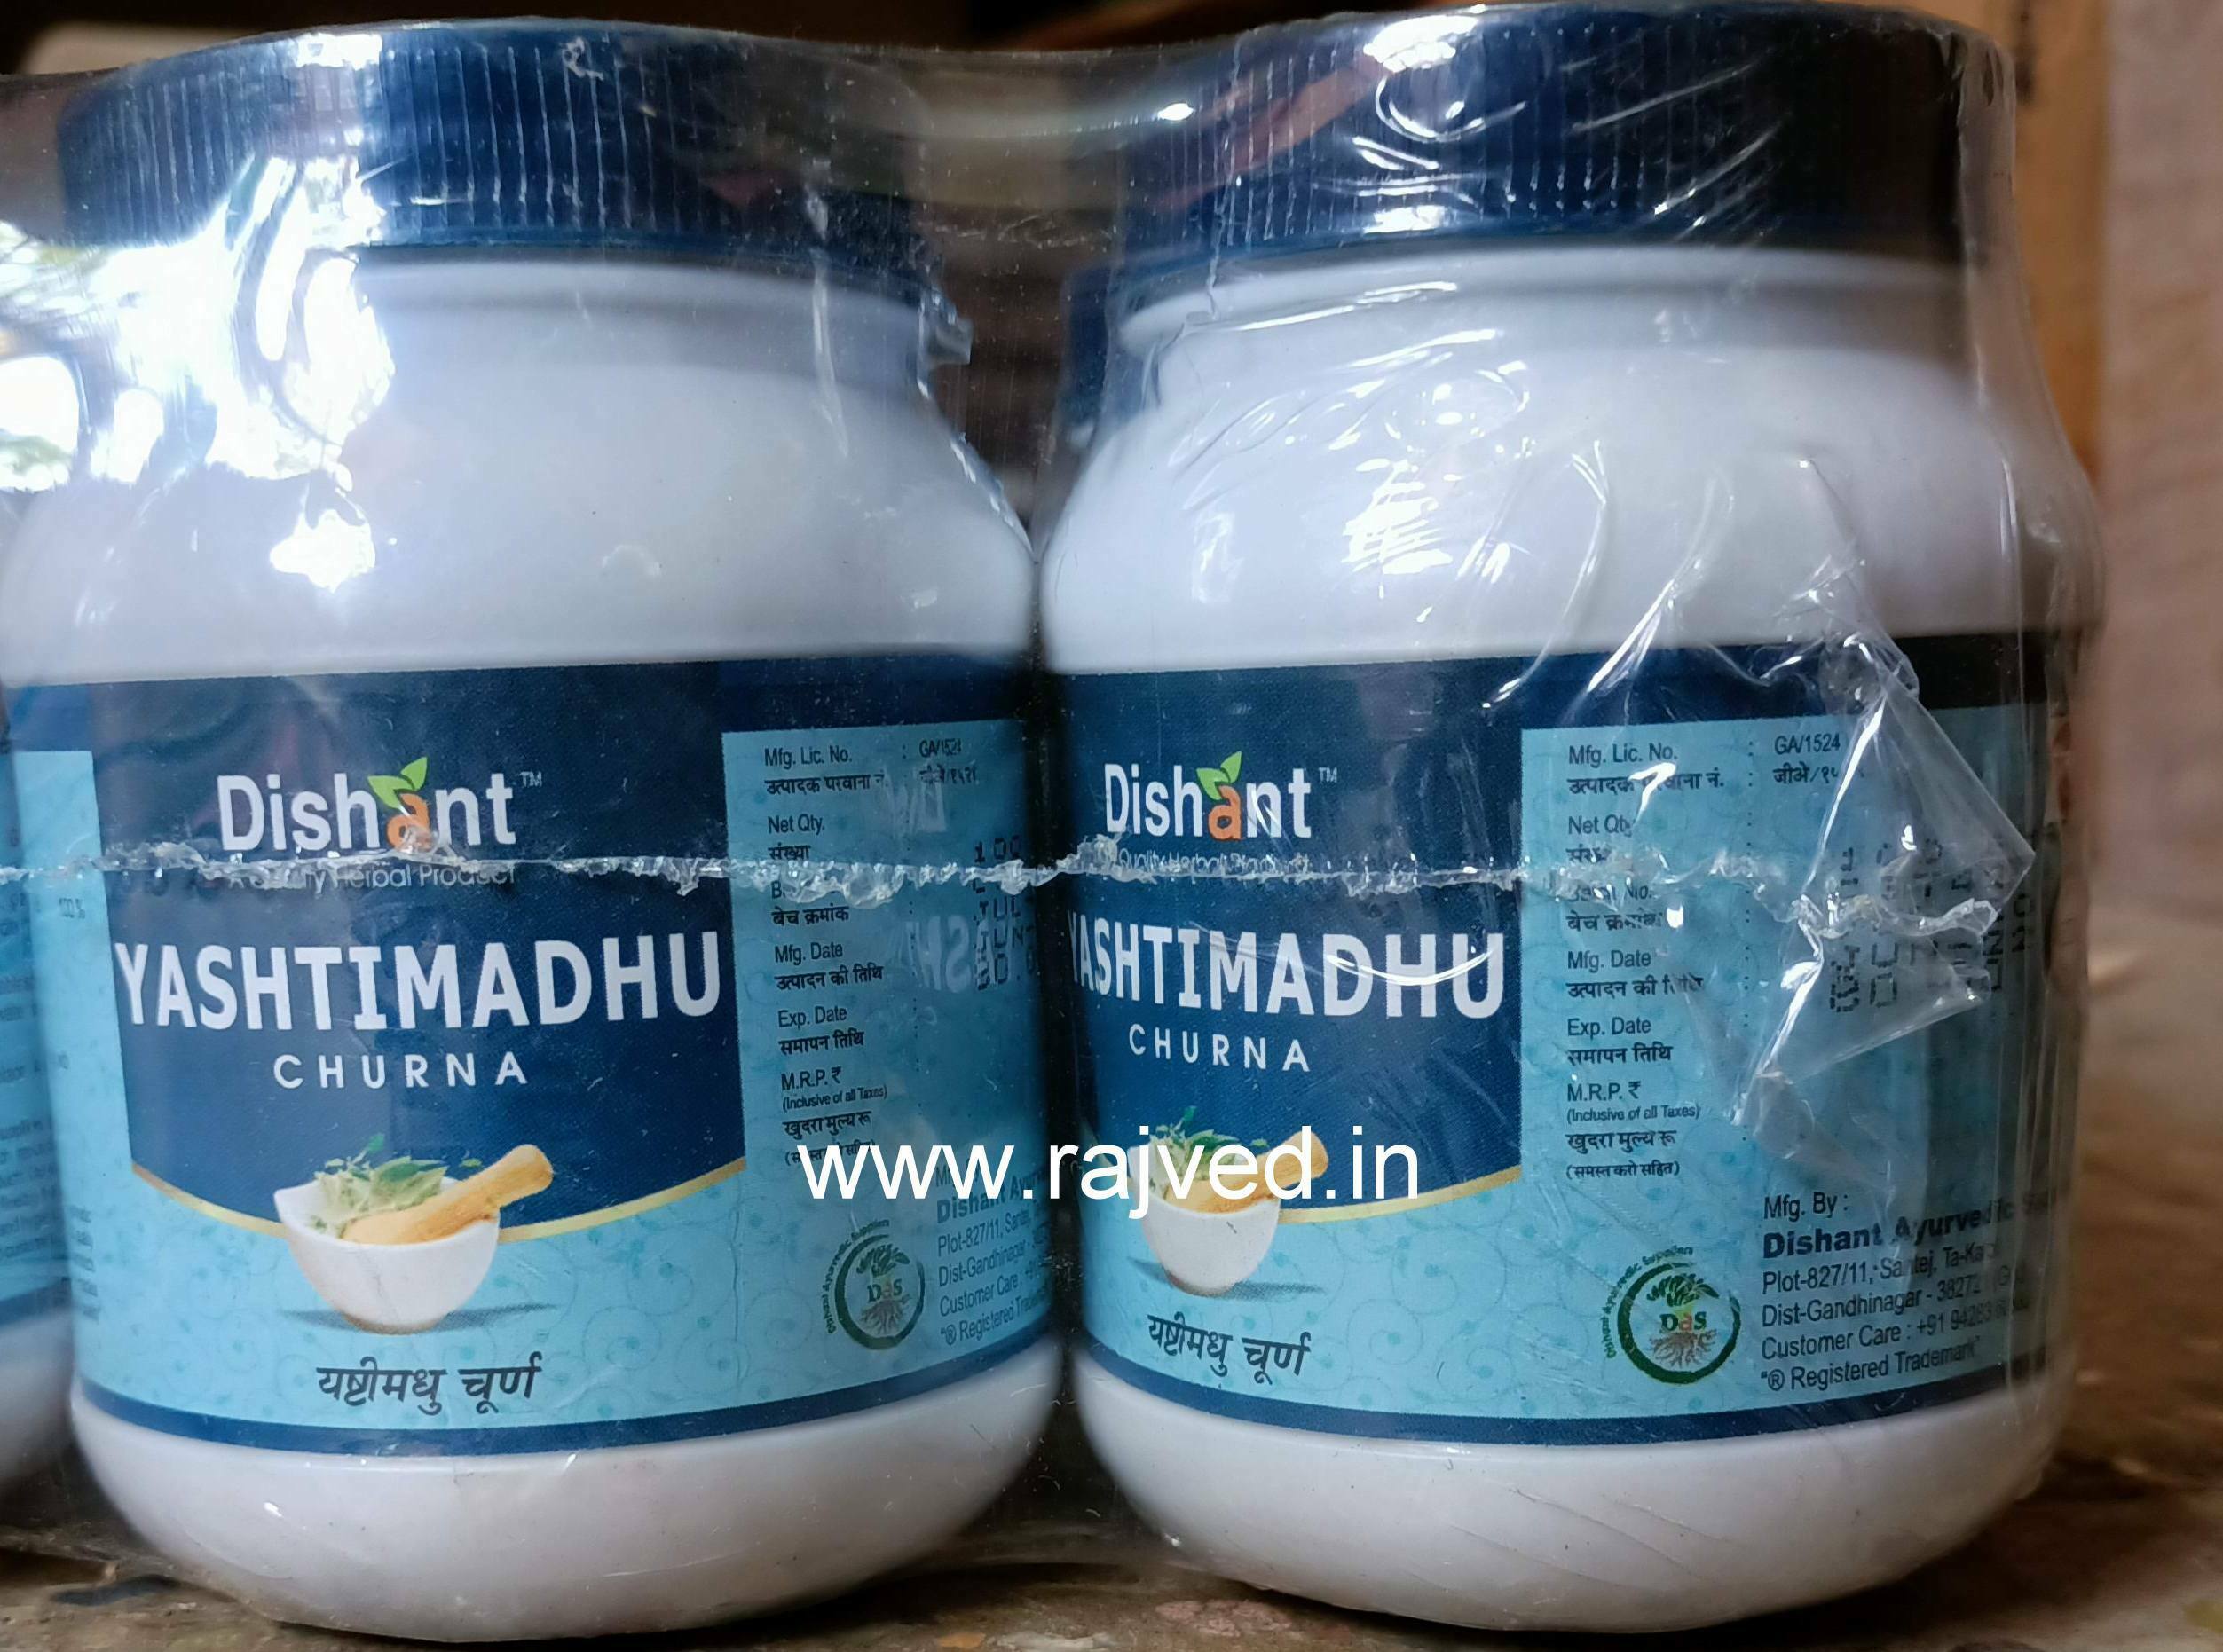 yashtimadhu churna 500gm upto 20% off dishant ayurvedic suppliers